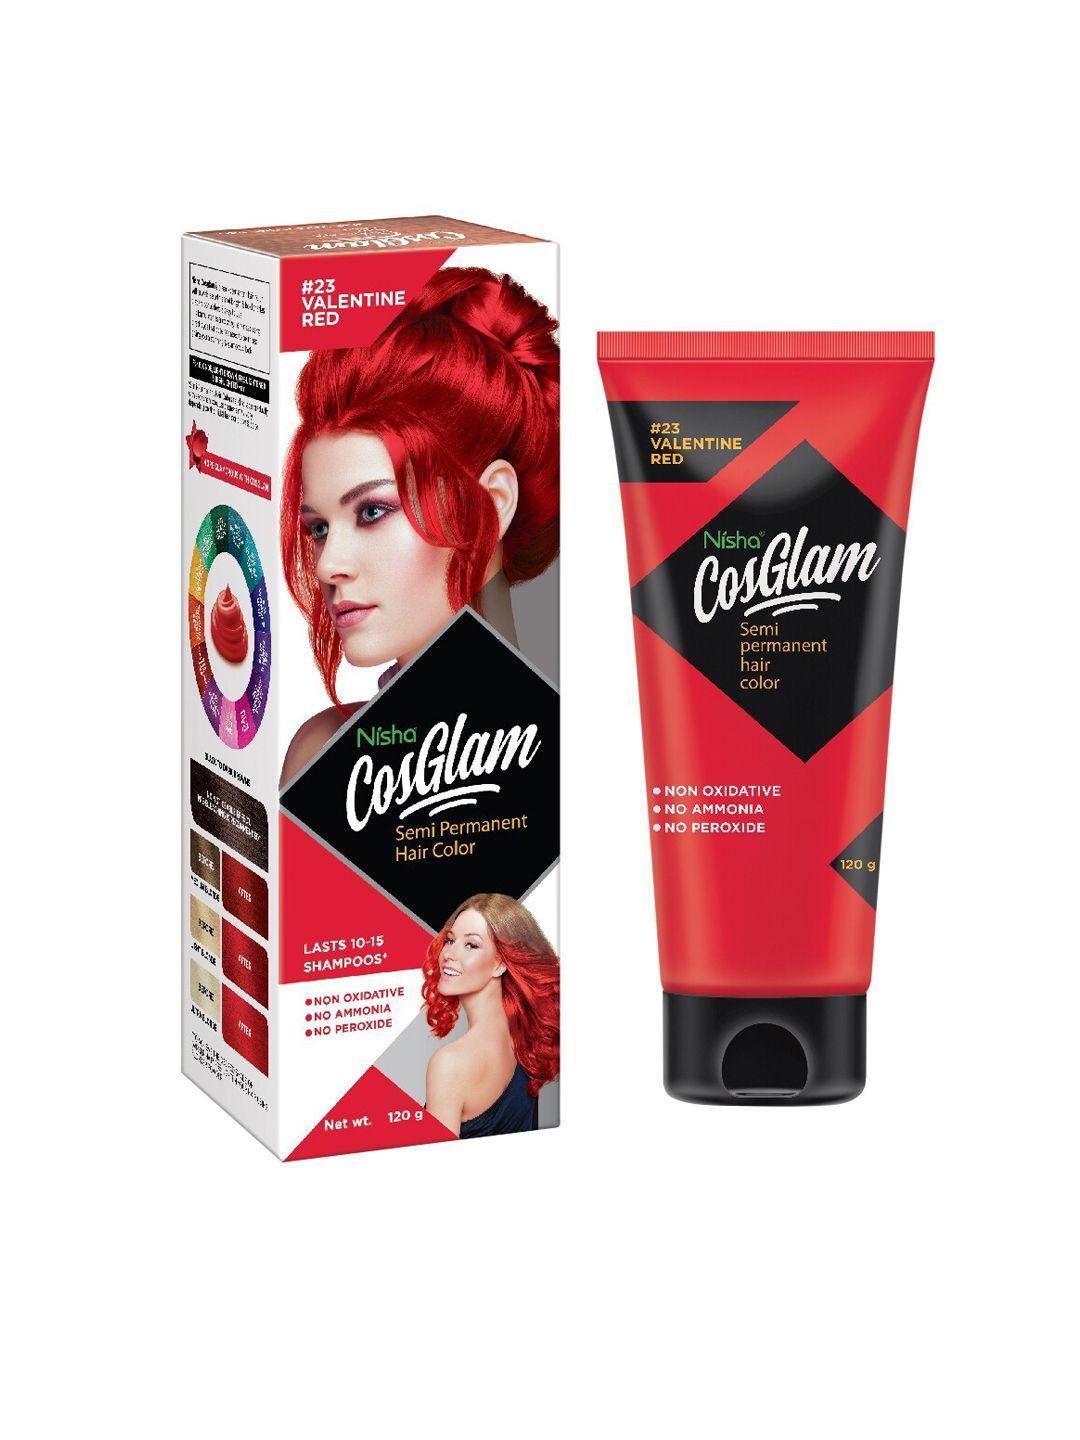 nisha cosglam semi-permanent hair color 120 g - valentine red 23